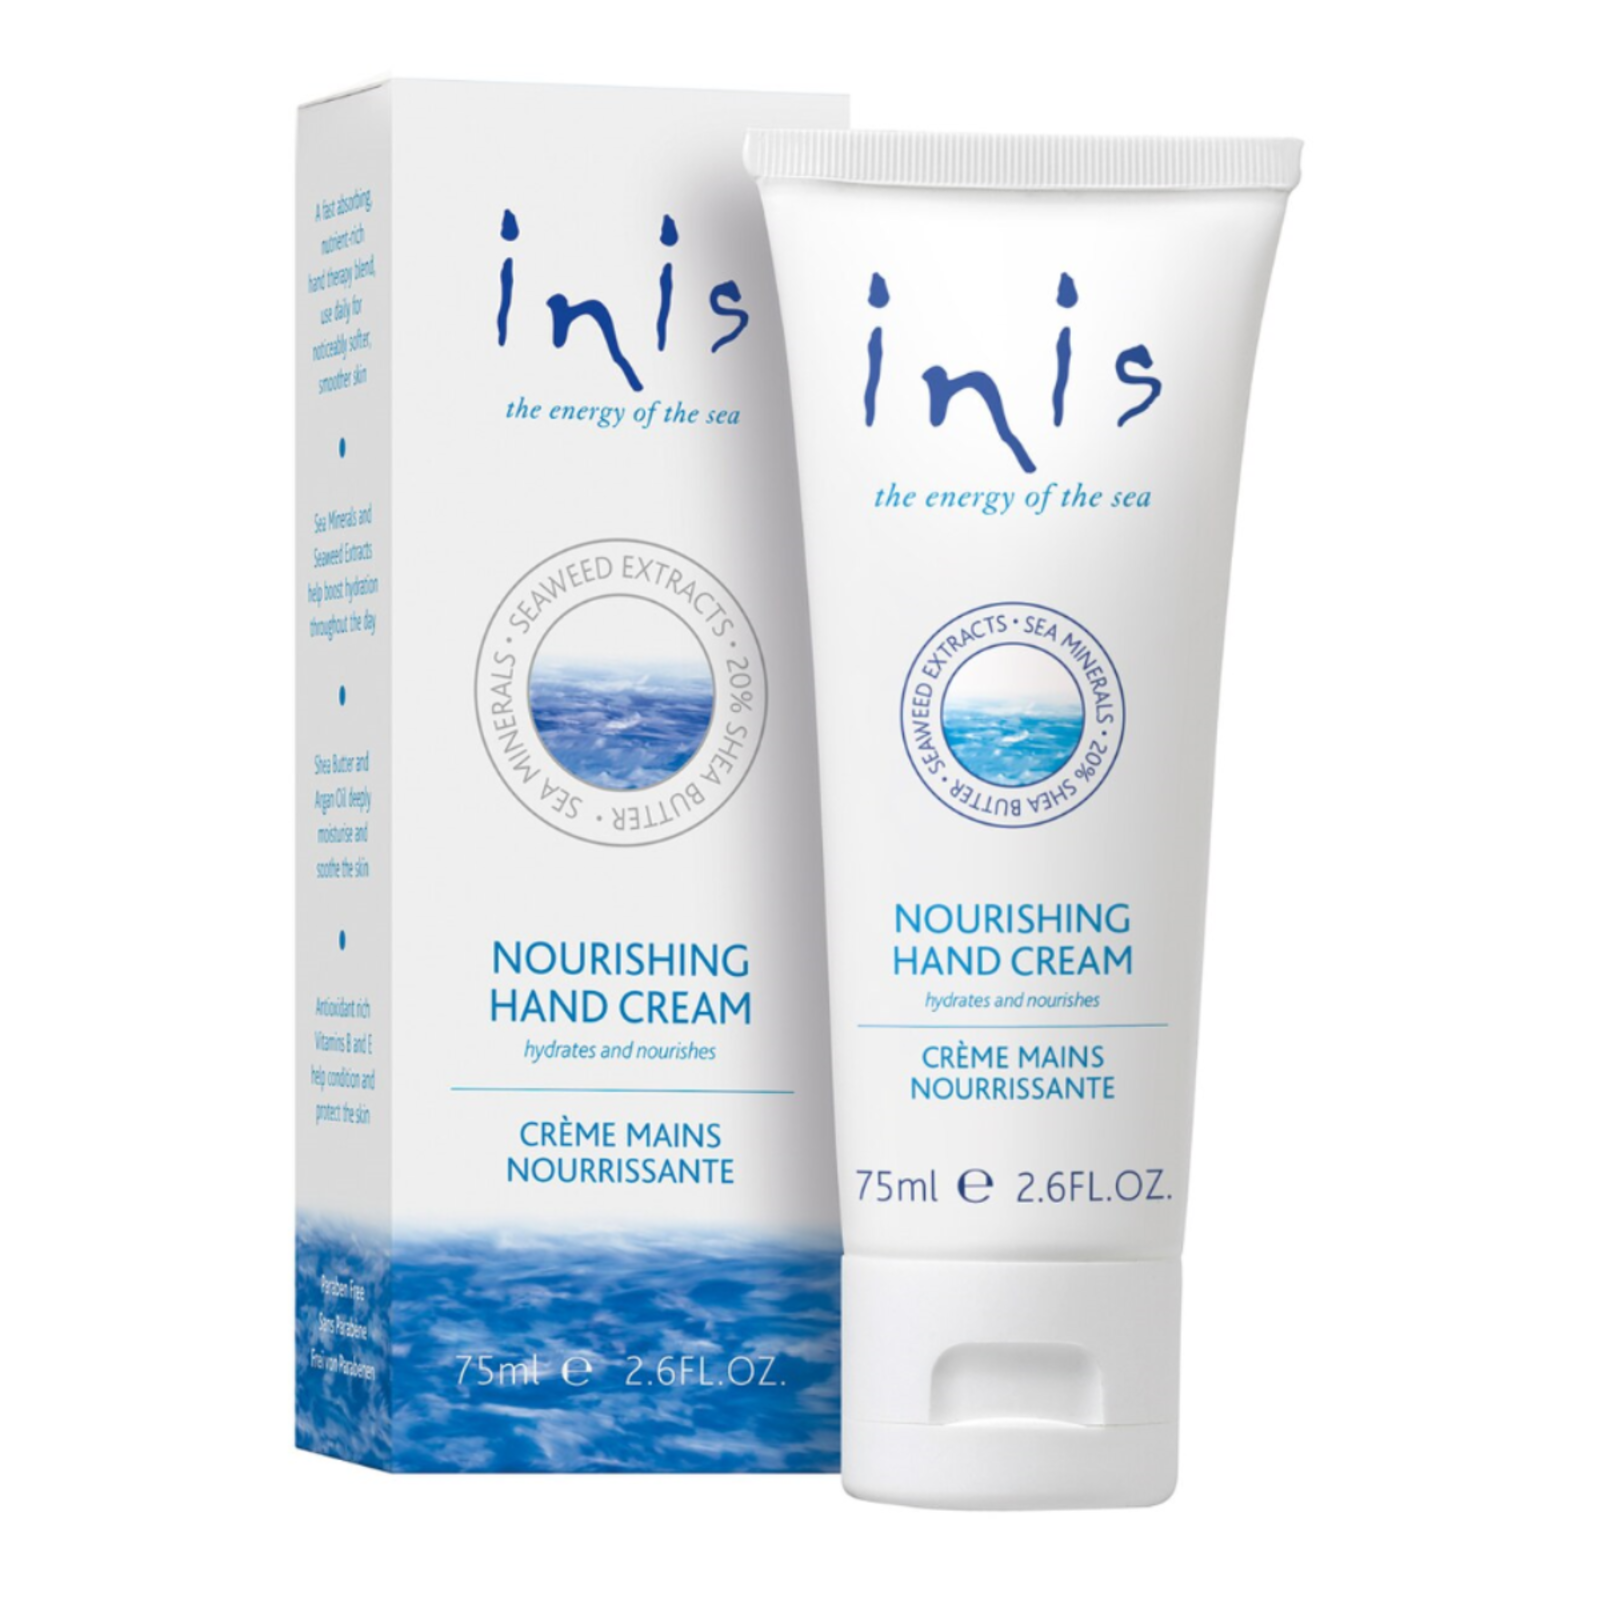 Inis Inis Hand Cream 2.6 fl oz.  8015556 loading=